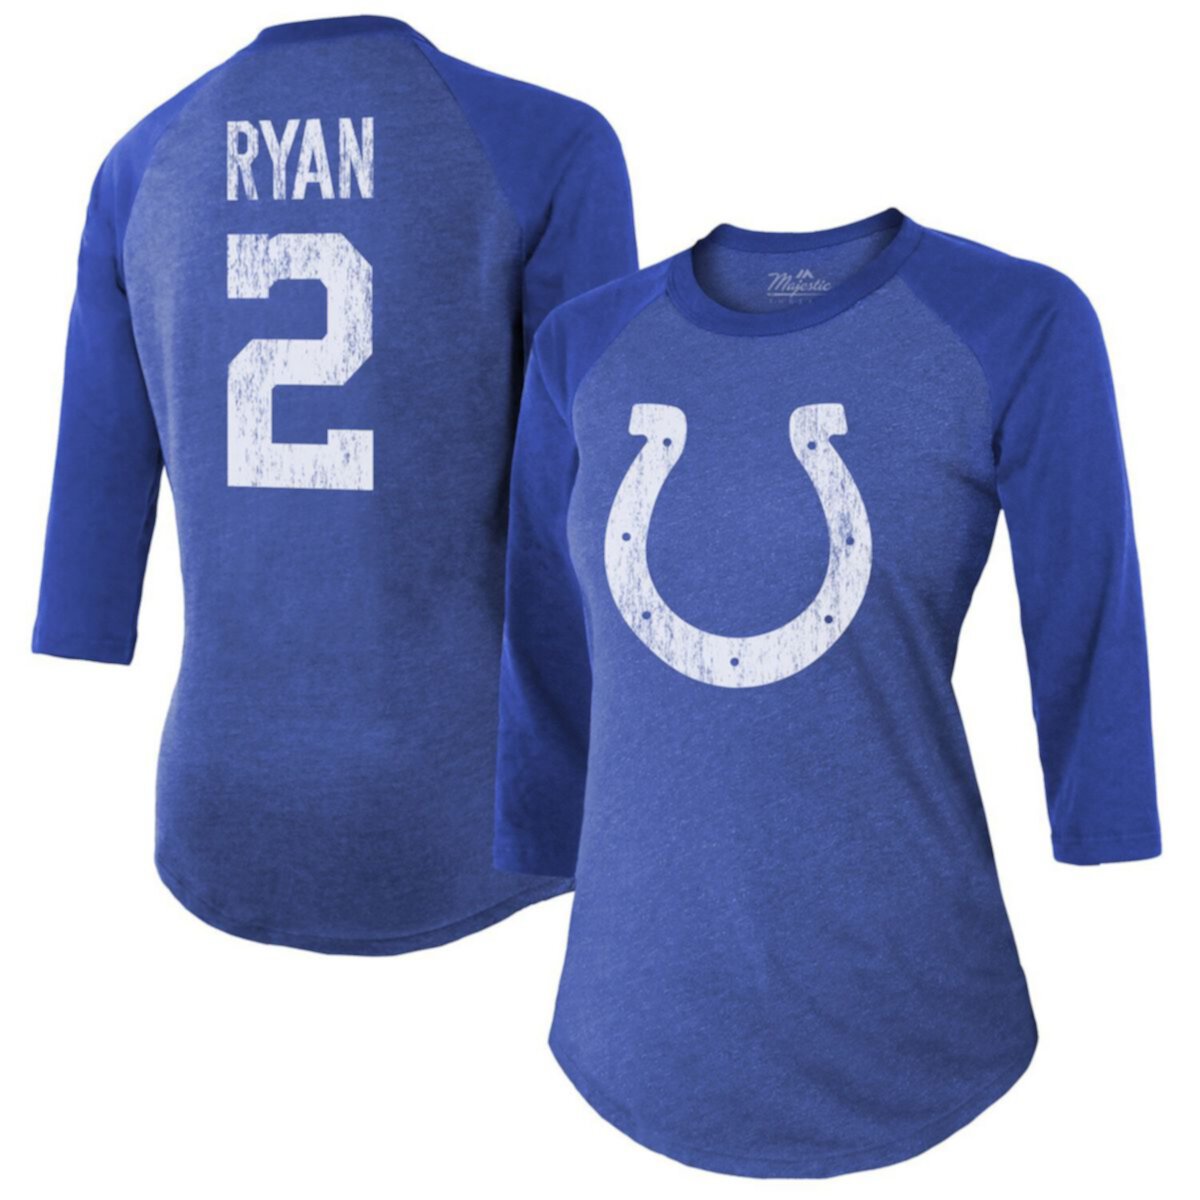 Women's Majestic Threads Matt Ryan Royal Indianapolis Colts Player Name & Number Raglan 3/4-Sleeve T-Shirt Majestic Threads